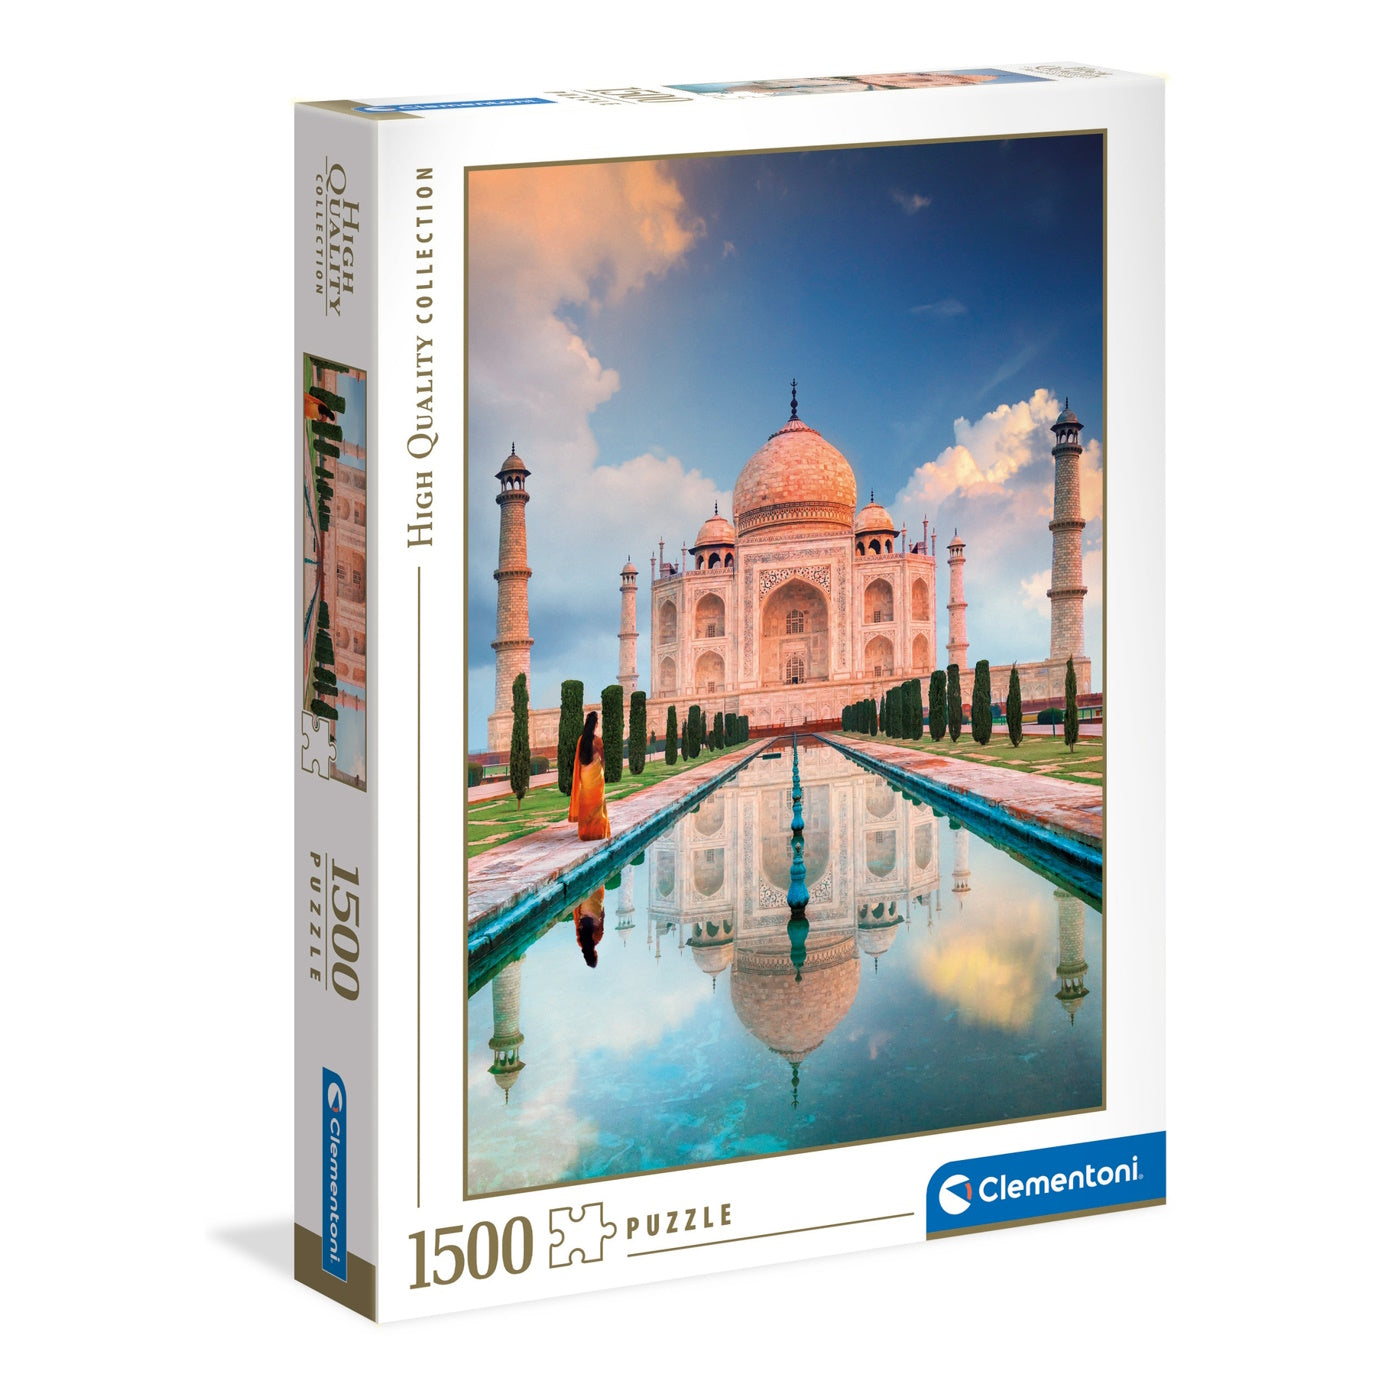 Clementoni 1500 Piece Jigsaw Puzzle - Taj Mahal